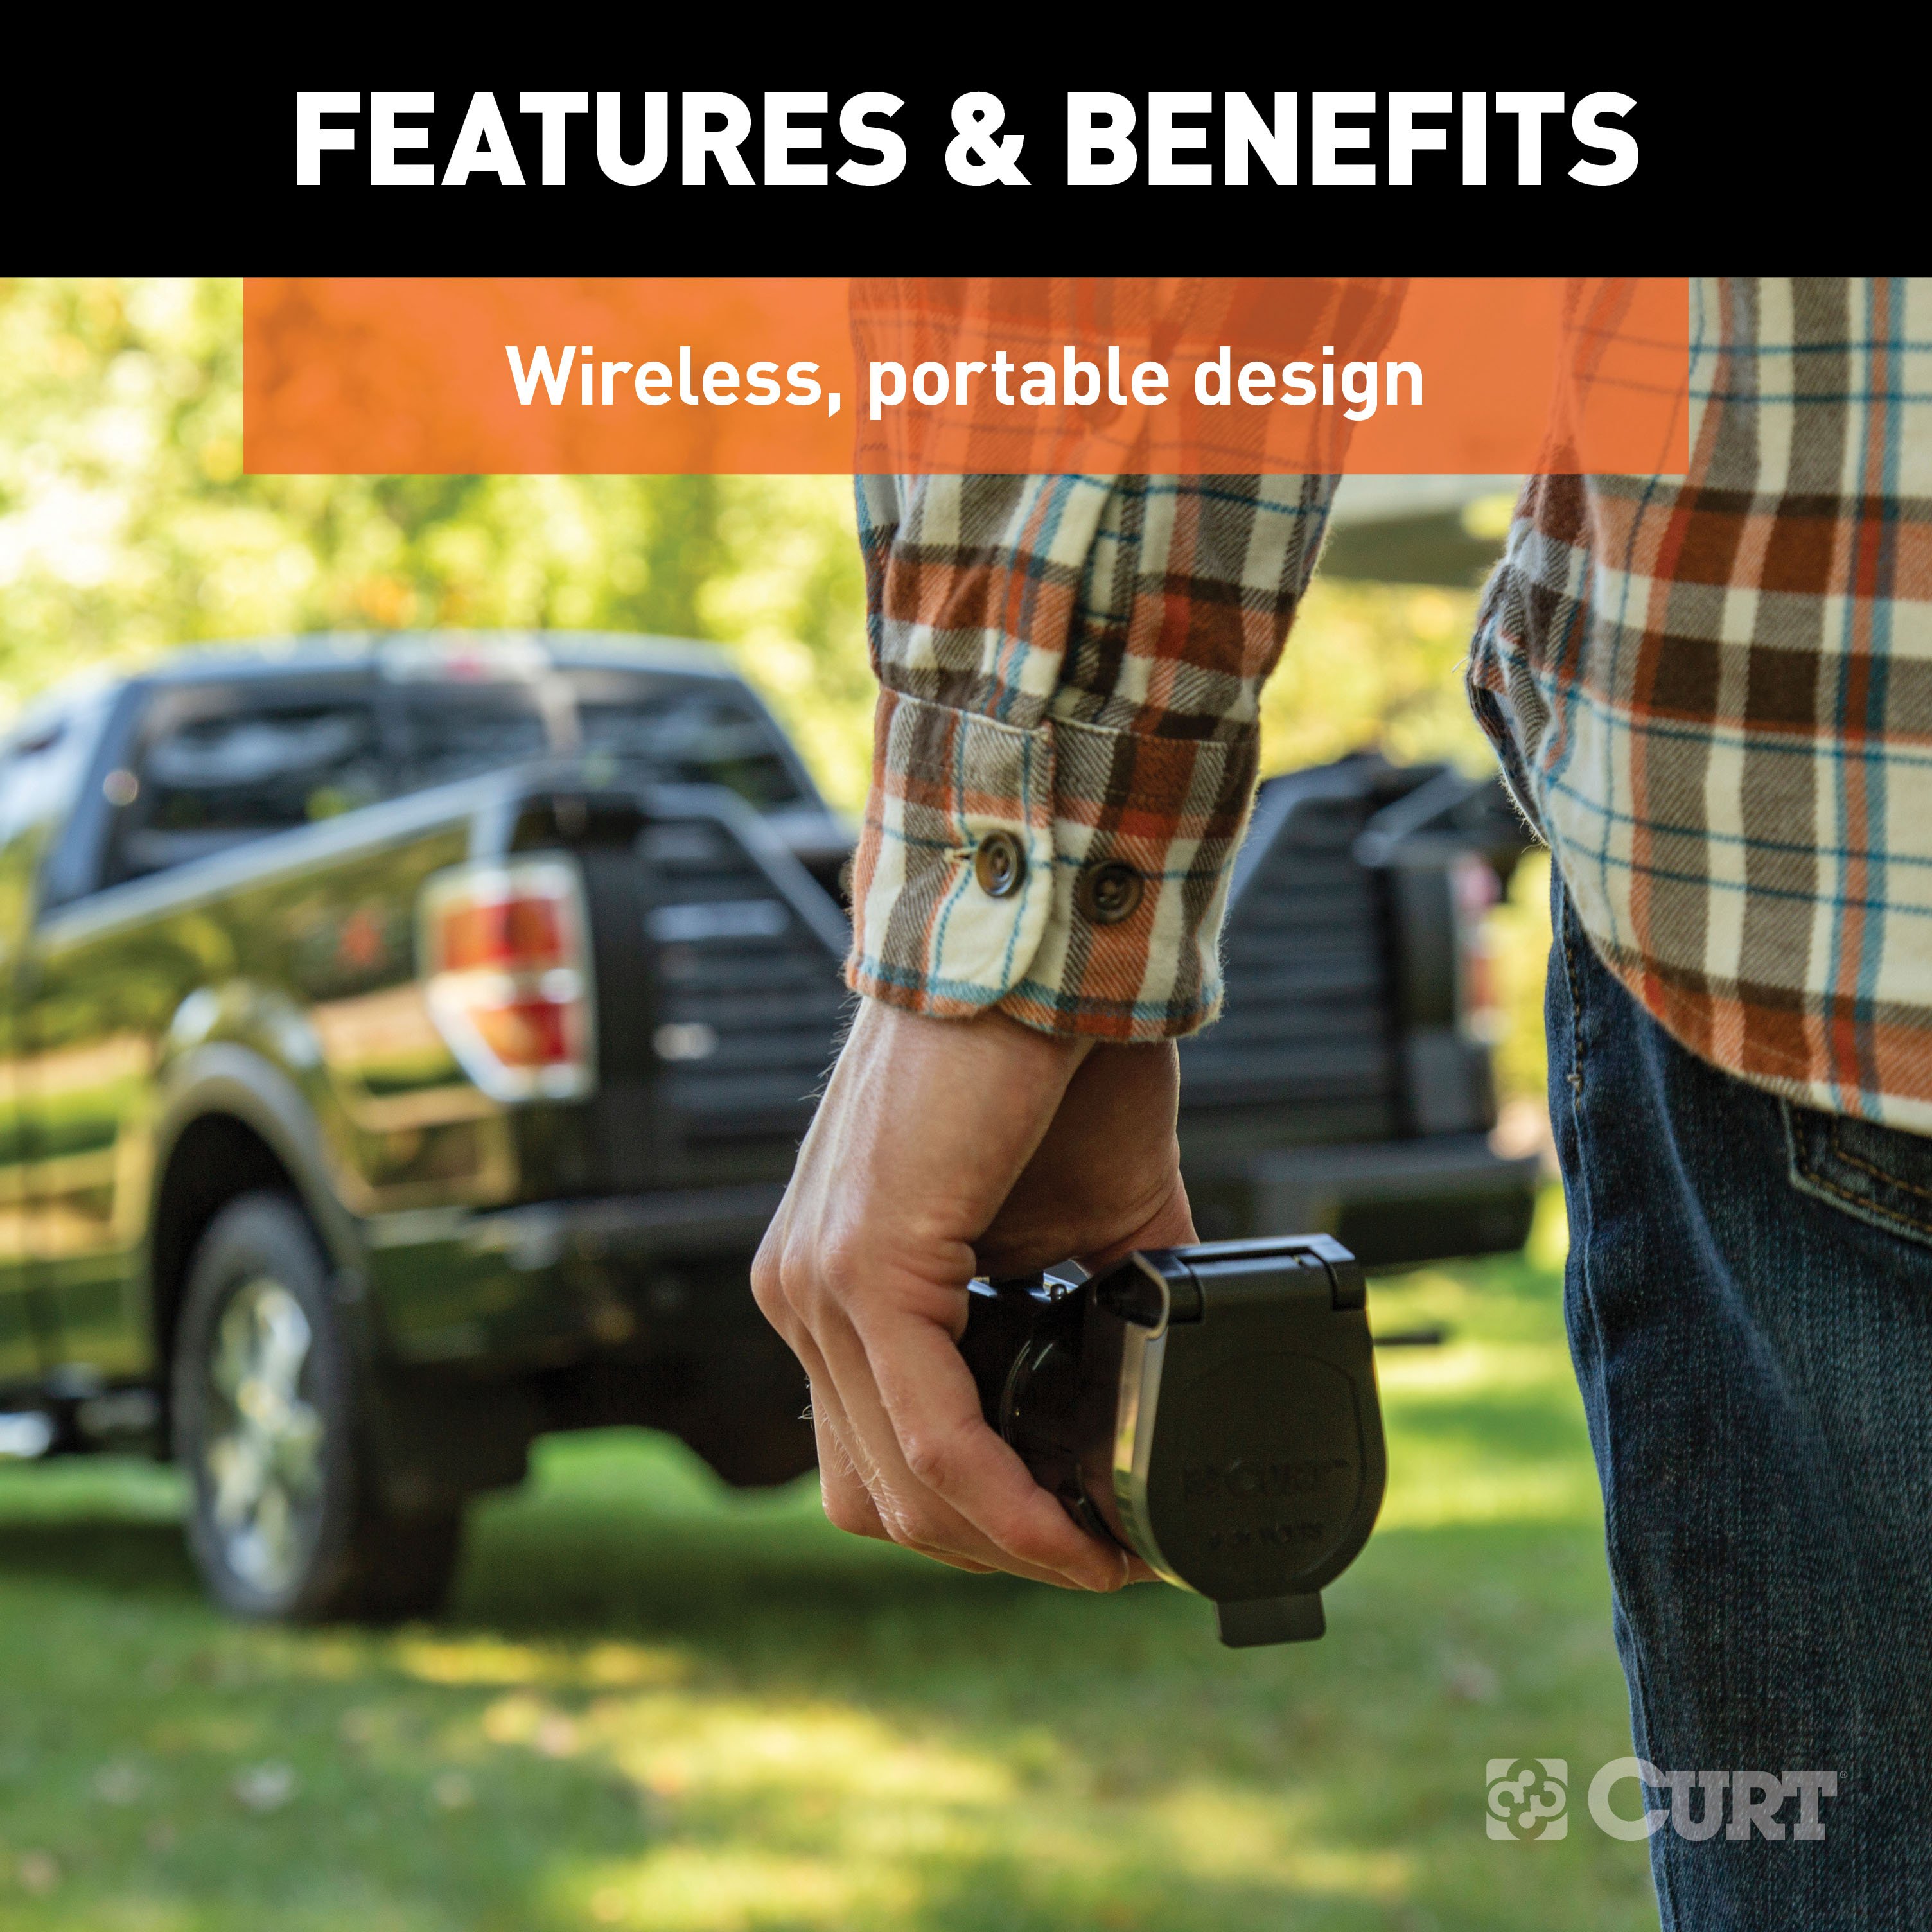 For 2015 Ram 3500 Curt Echo Brake Controller Module Box Proportional Wireless Bluetooth Fits All Models Curt 51180